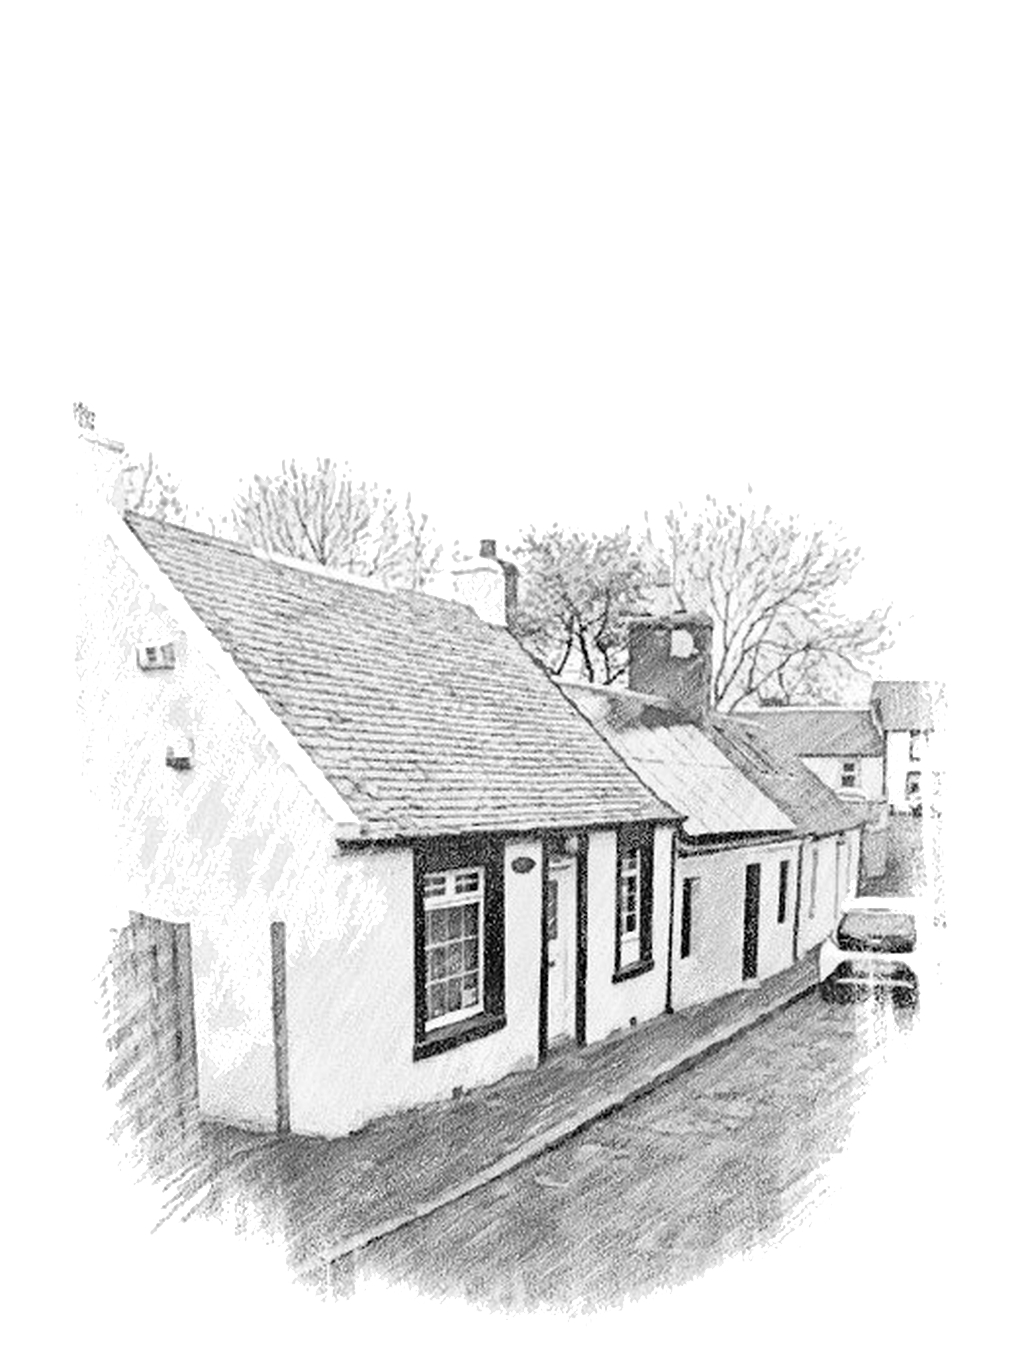 Burns Street - Composed by John C Grant (https://johncgrant.com). Traditional composer from Kilmarnock, Ayrshire, Scotland.